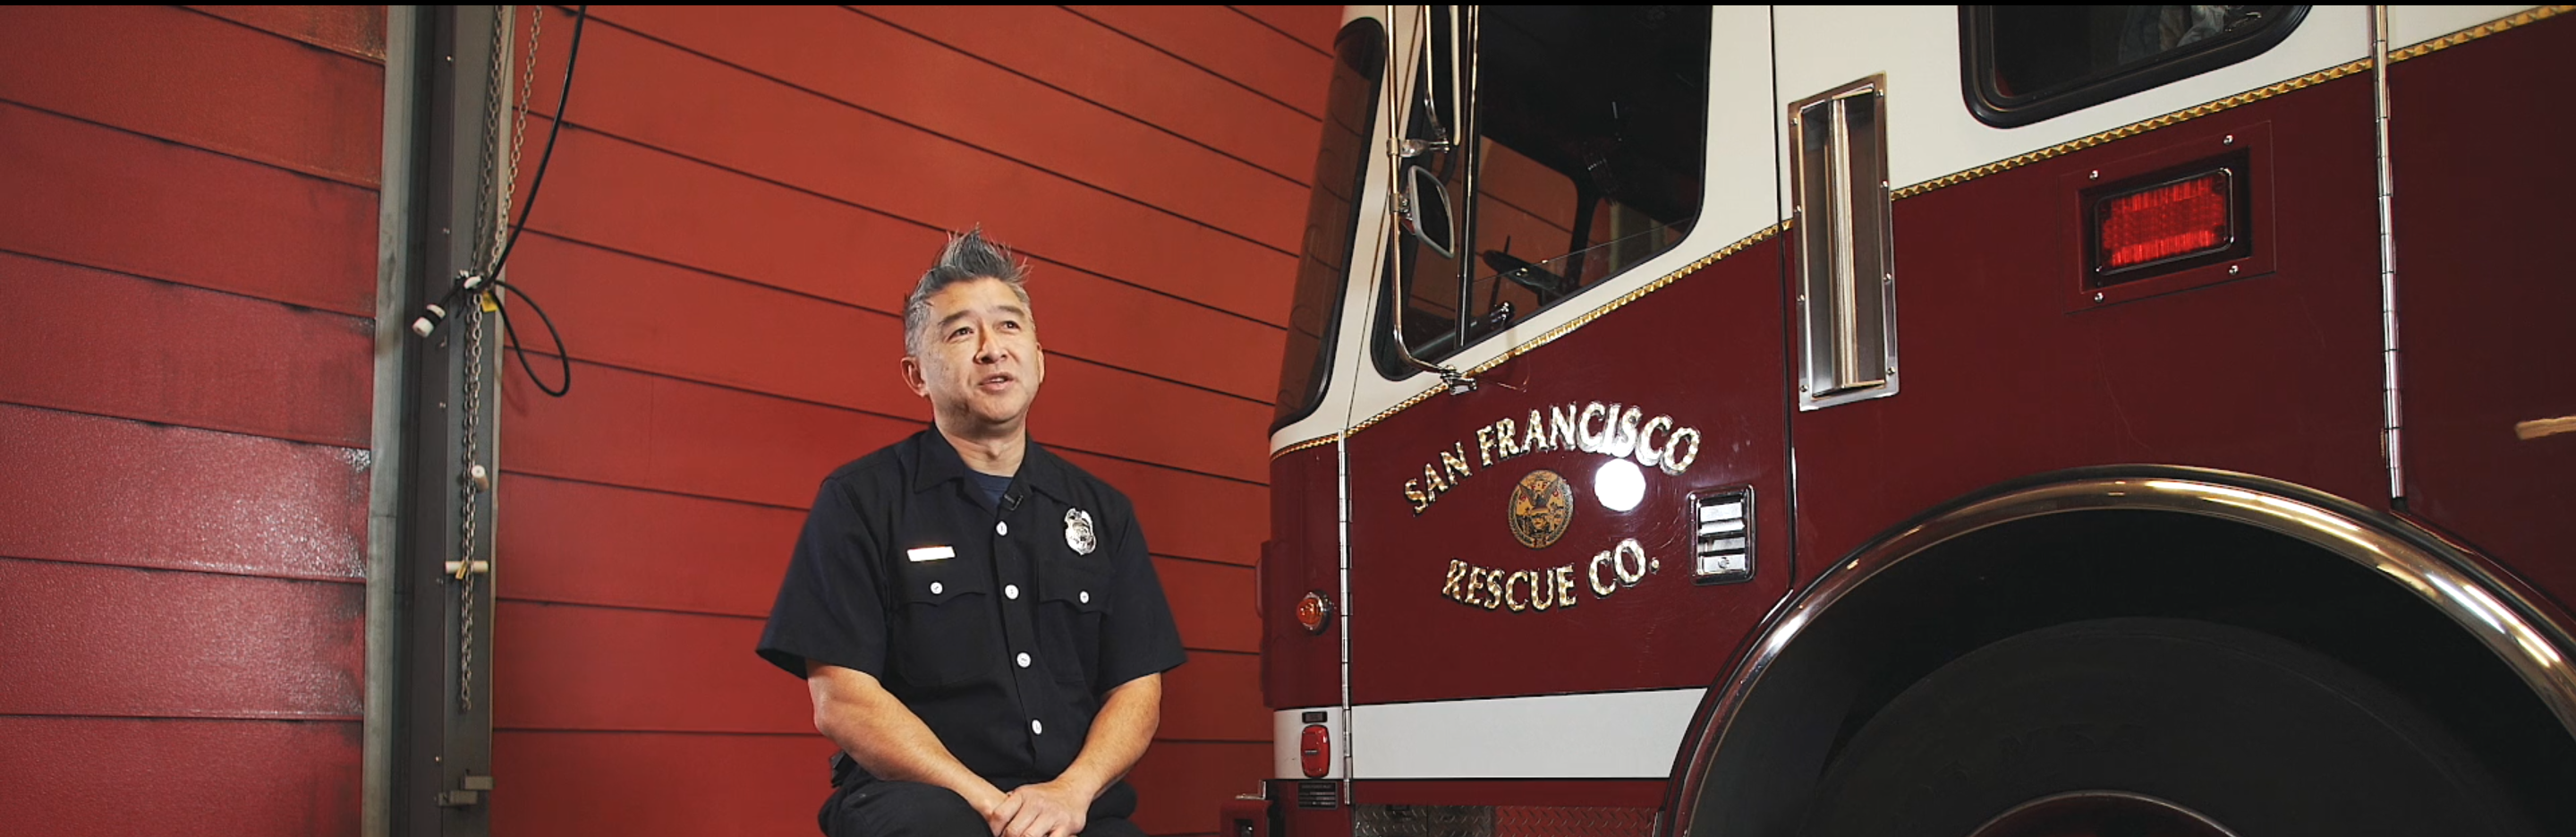 San Francisco, California firefighter